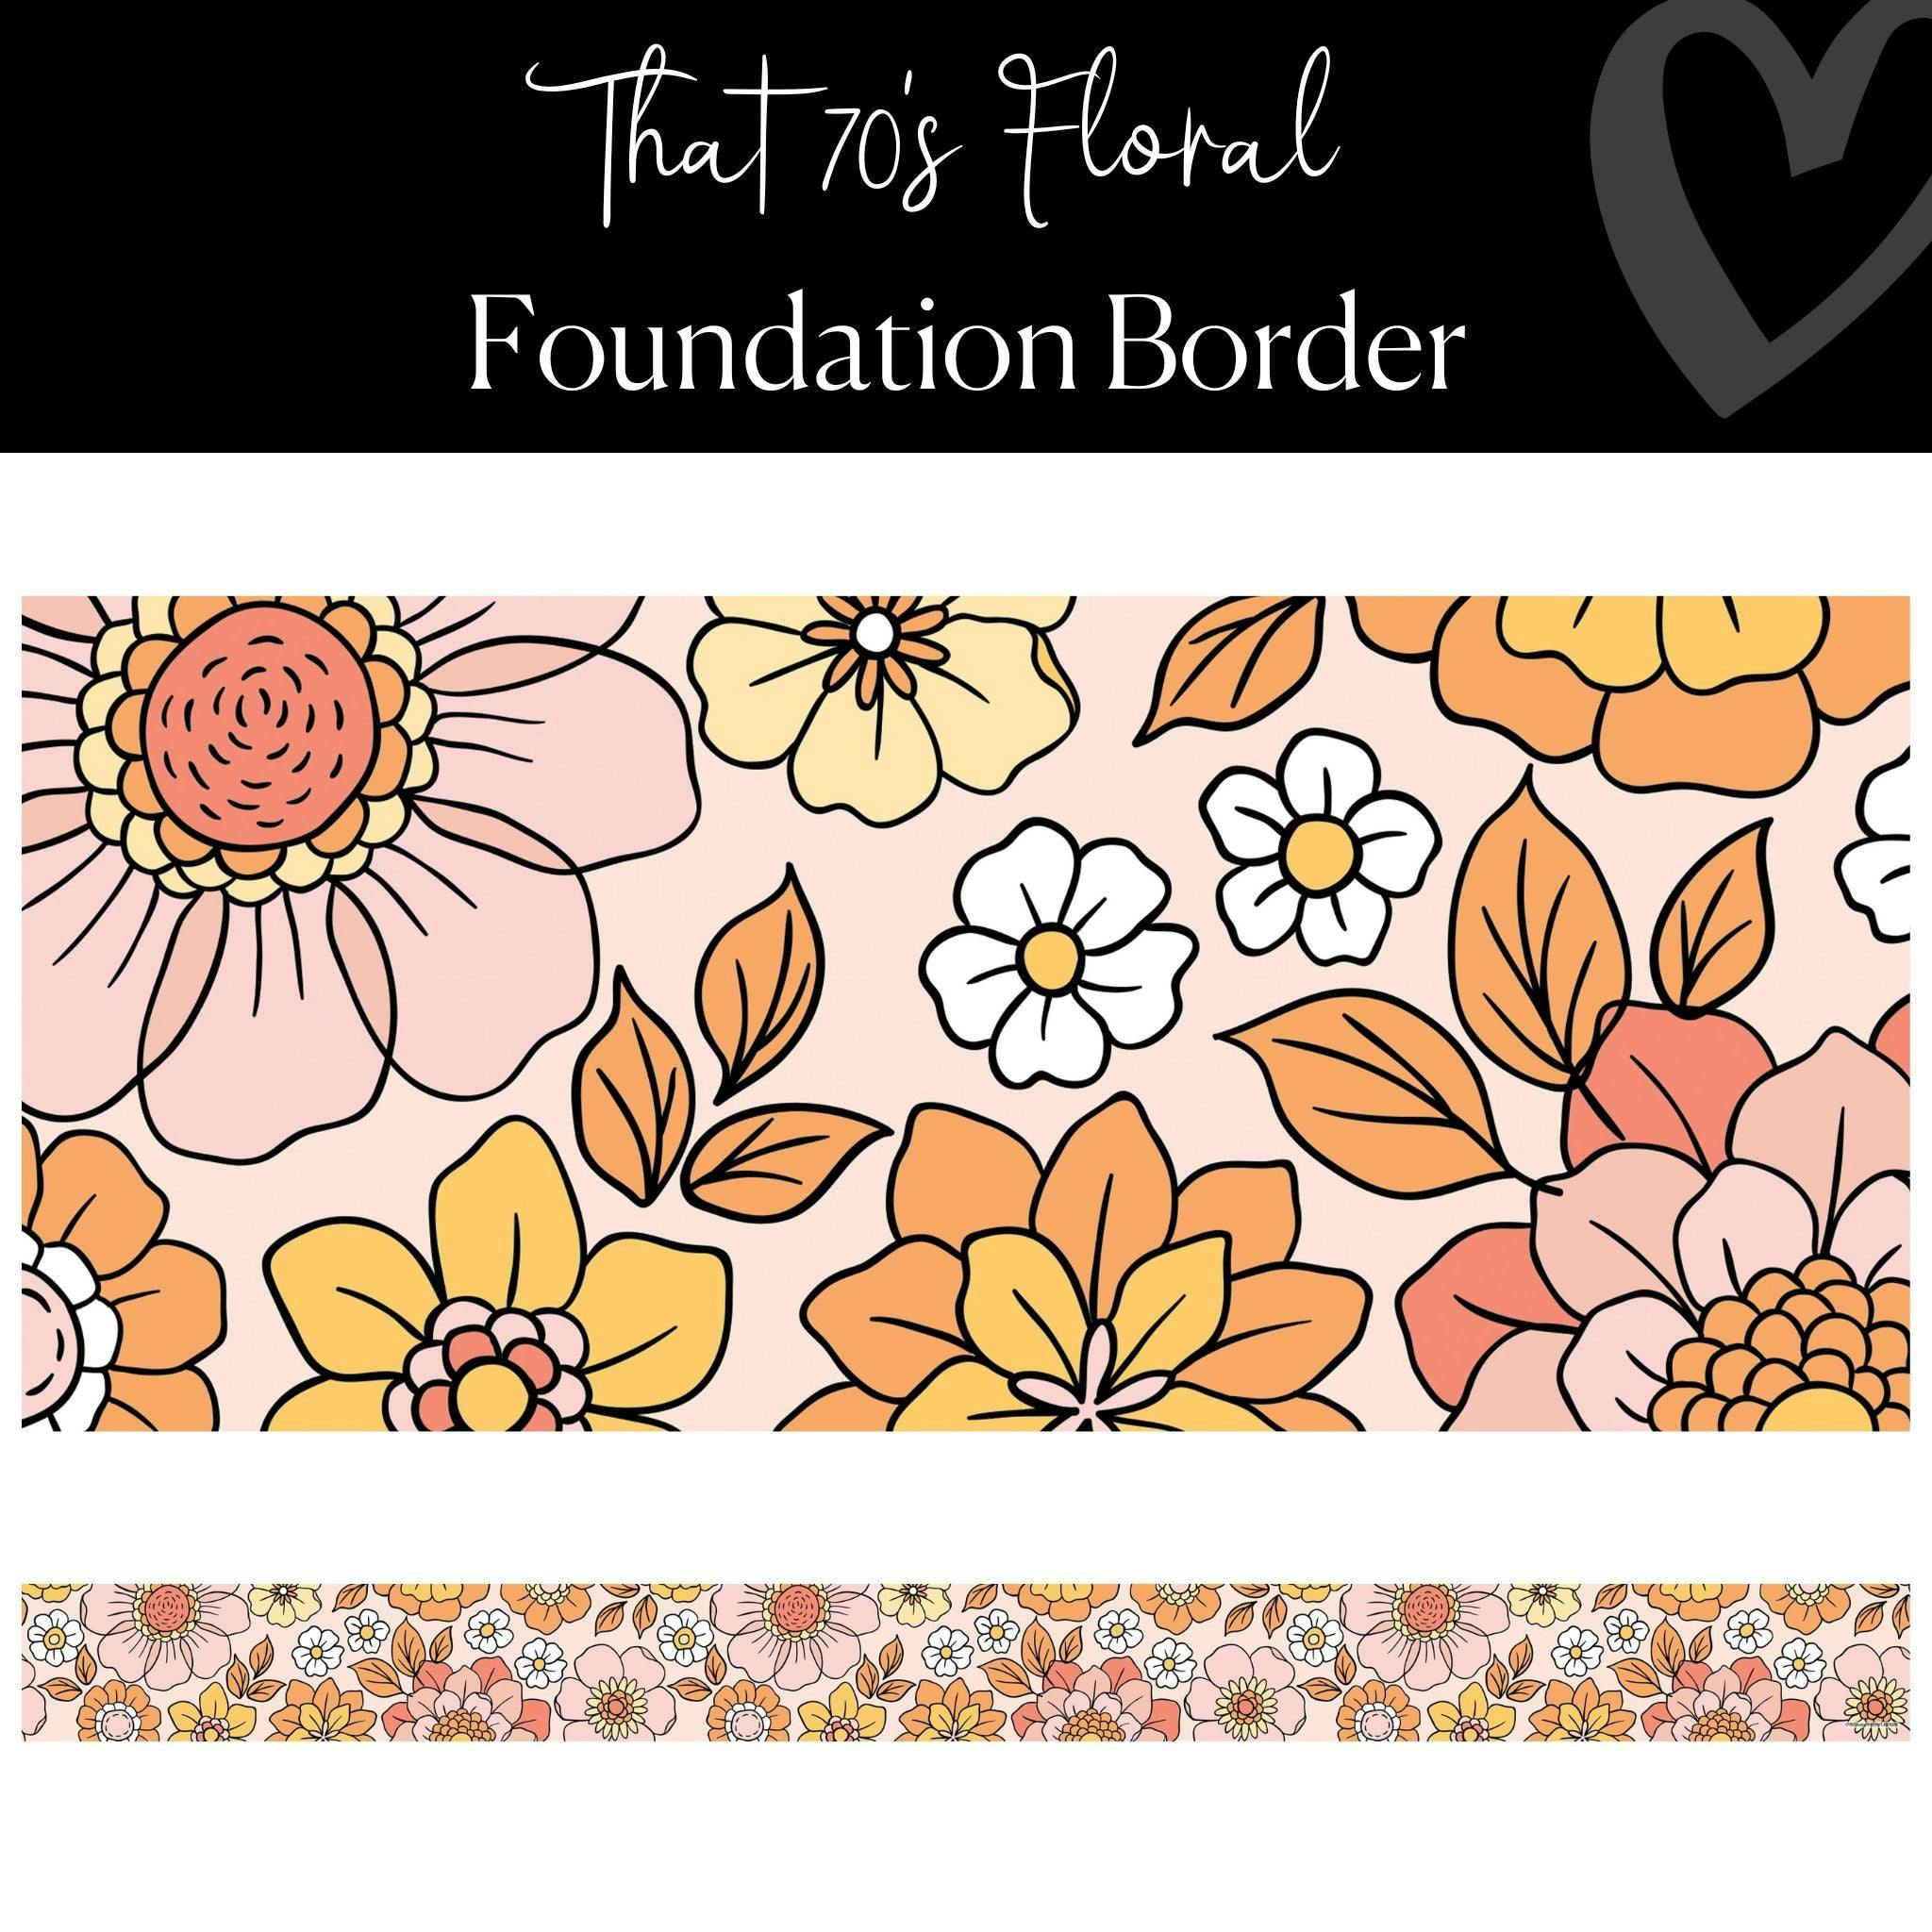 Retro Classroom Decor | Floral Straight Border | "That 70's Floral" Foundation Border | Schoolgirl Style